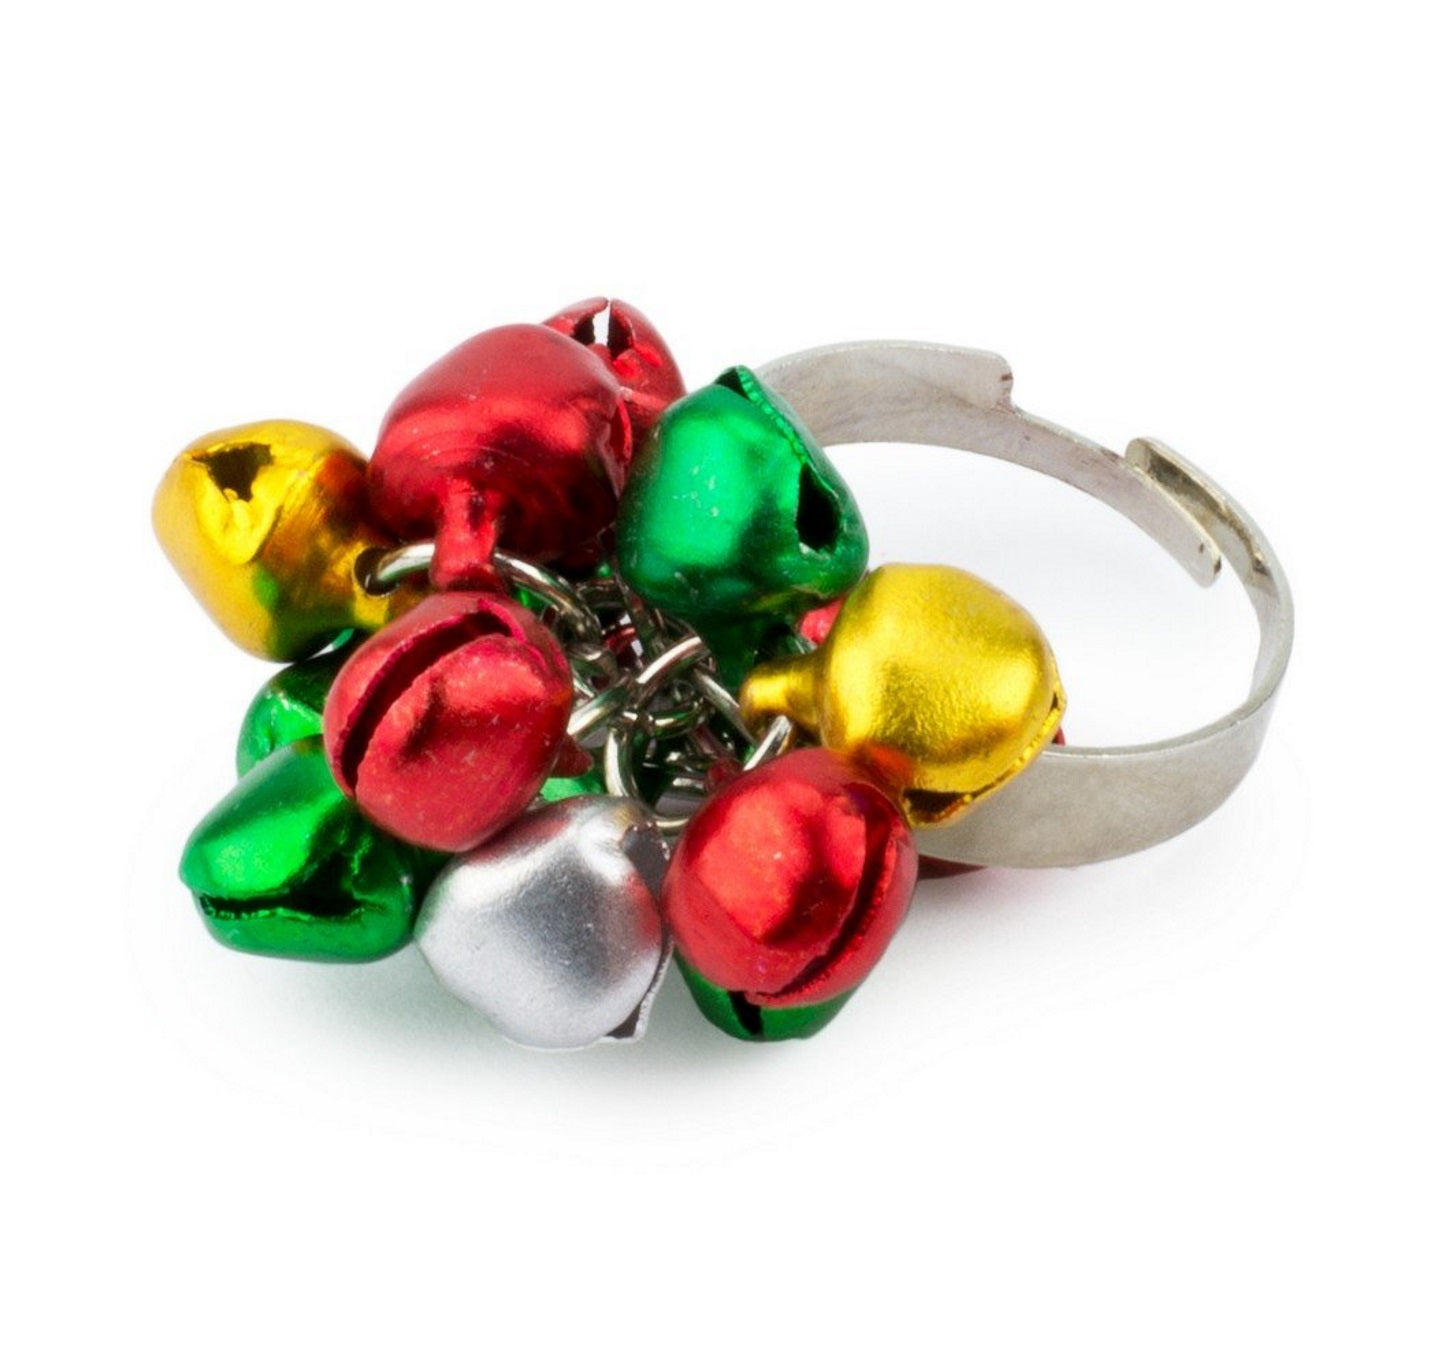 Ring: Festive Bells